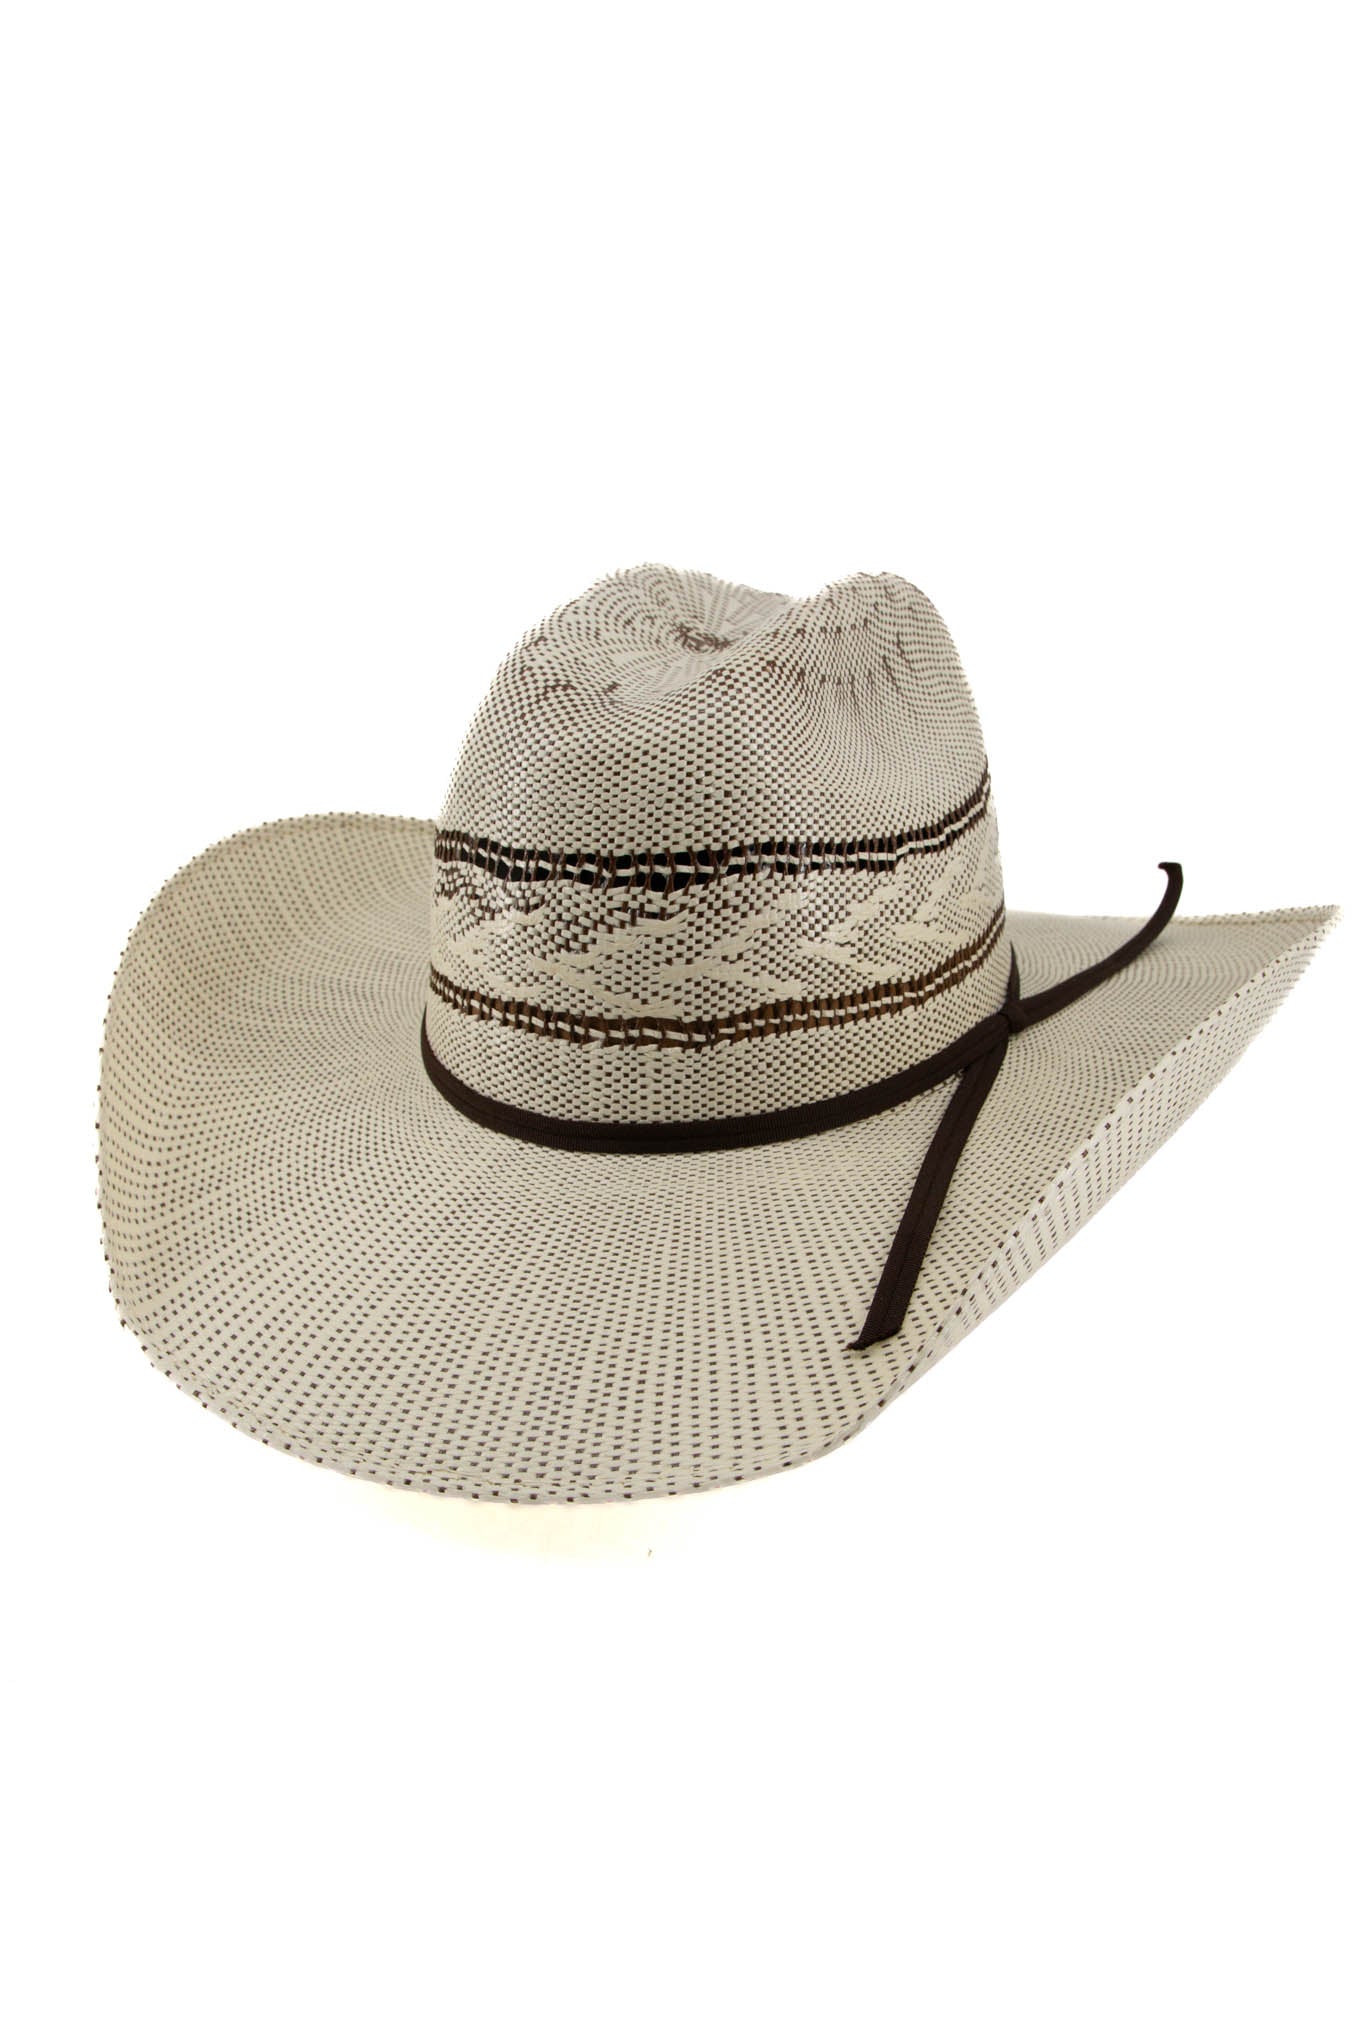 Refugio Malboro 10X Straw Hat